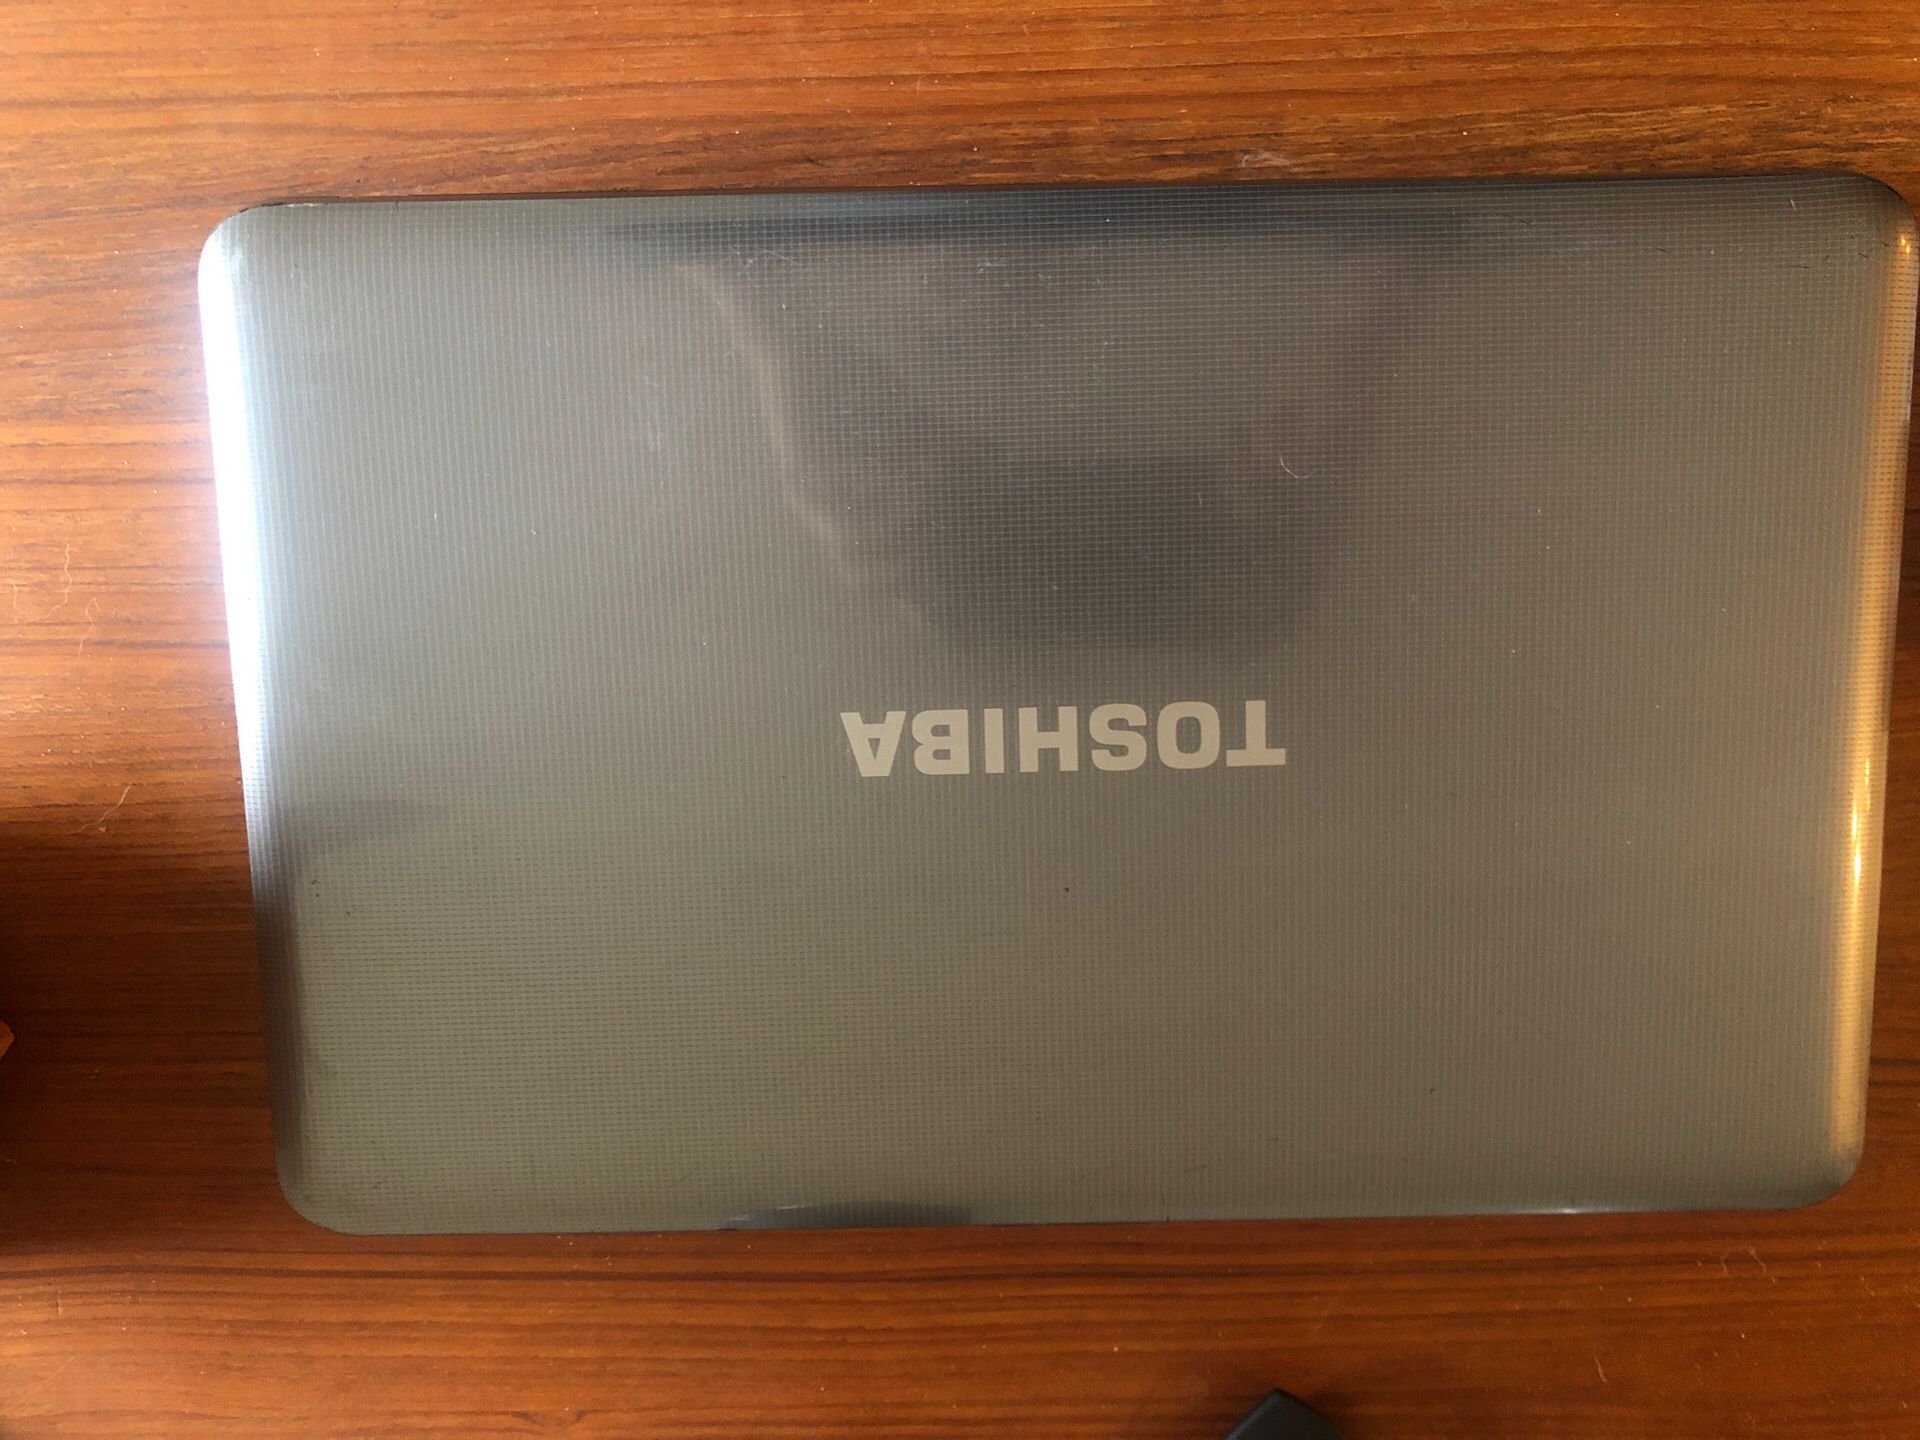 Toshiba laptop. Works perfectly